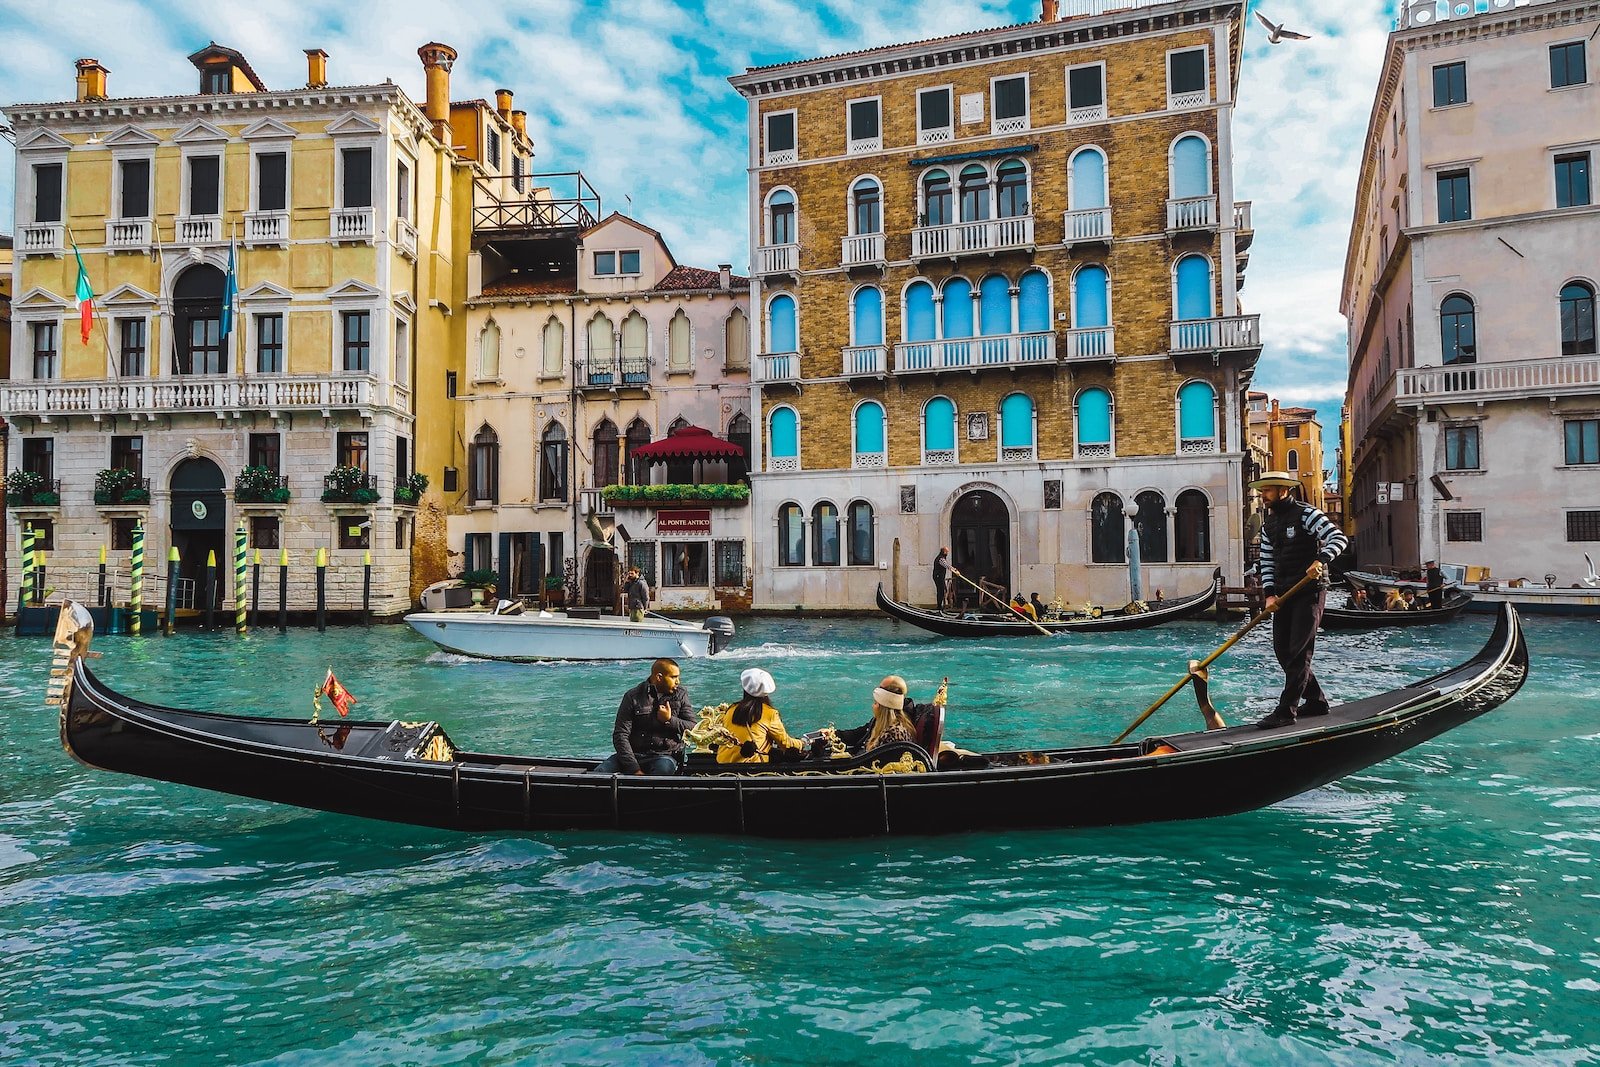 gondola venecia agua canales italia